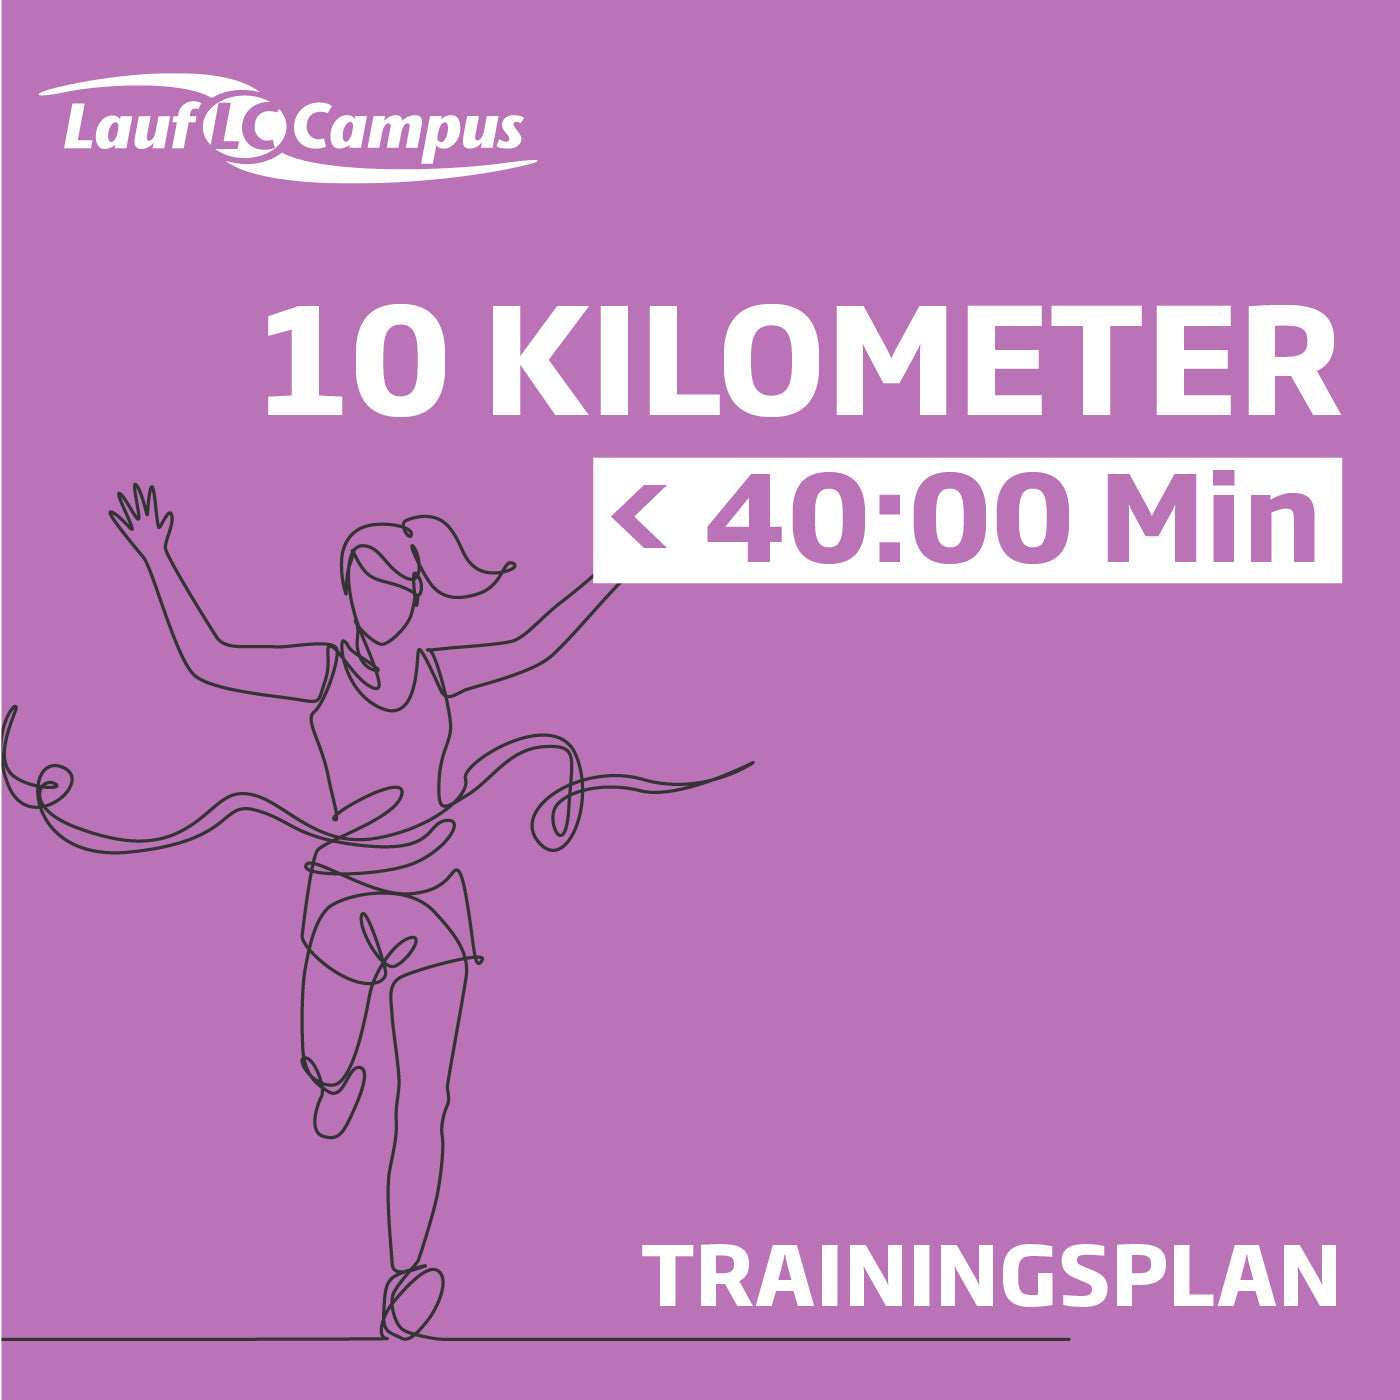 Trainingsplan 10 km unter 40 Minuten